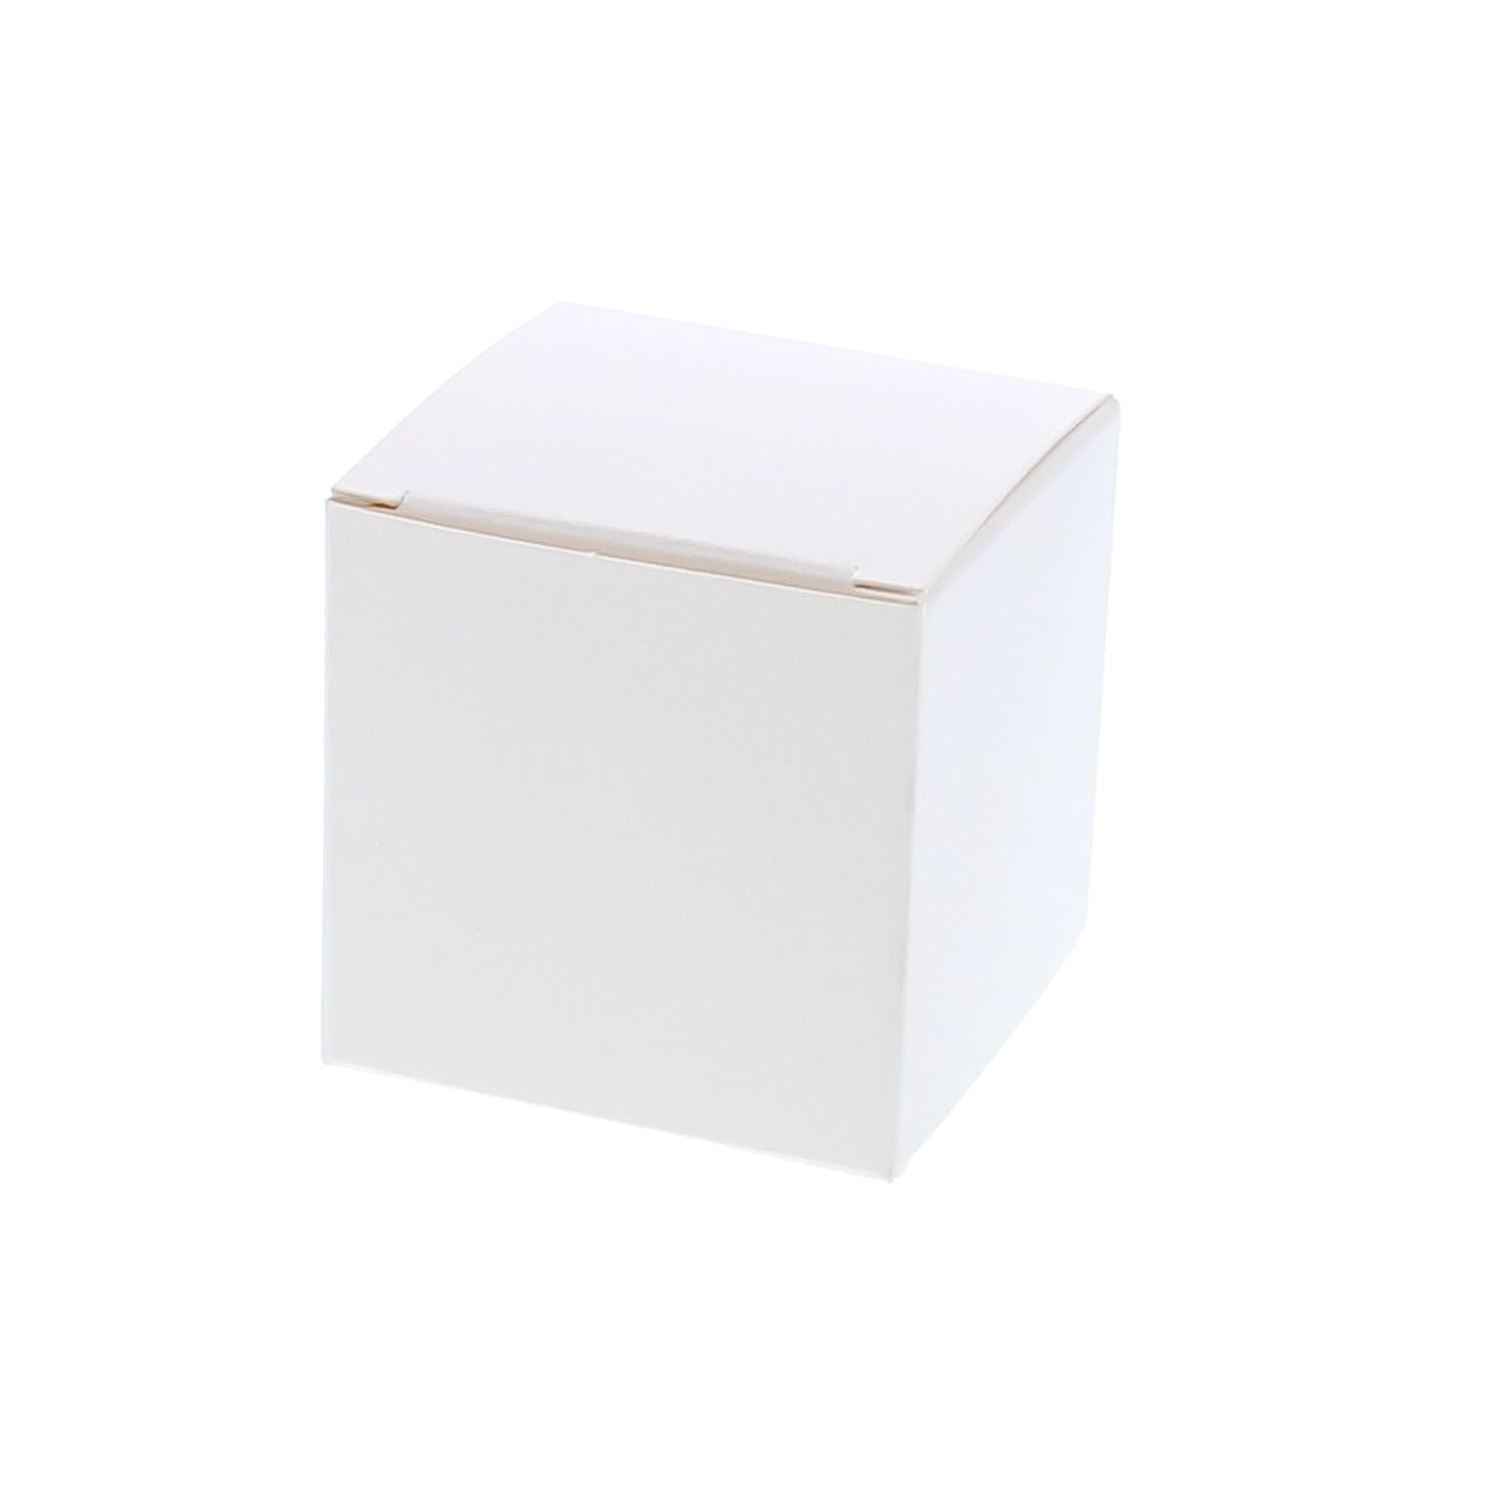 Klein kubus doosje wit - 100 stuks